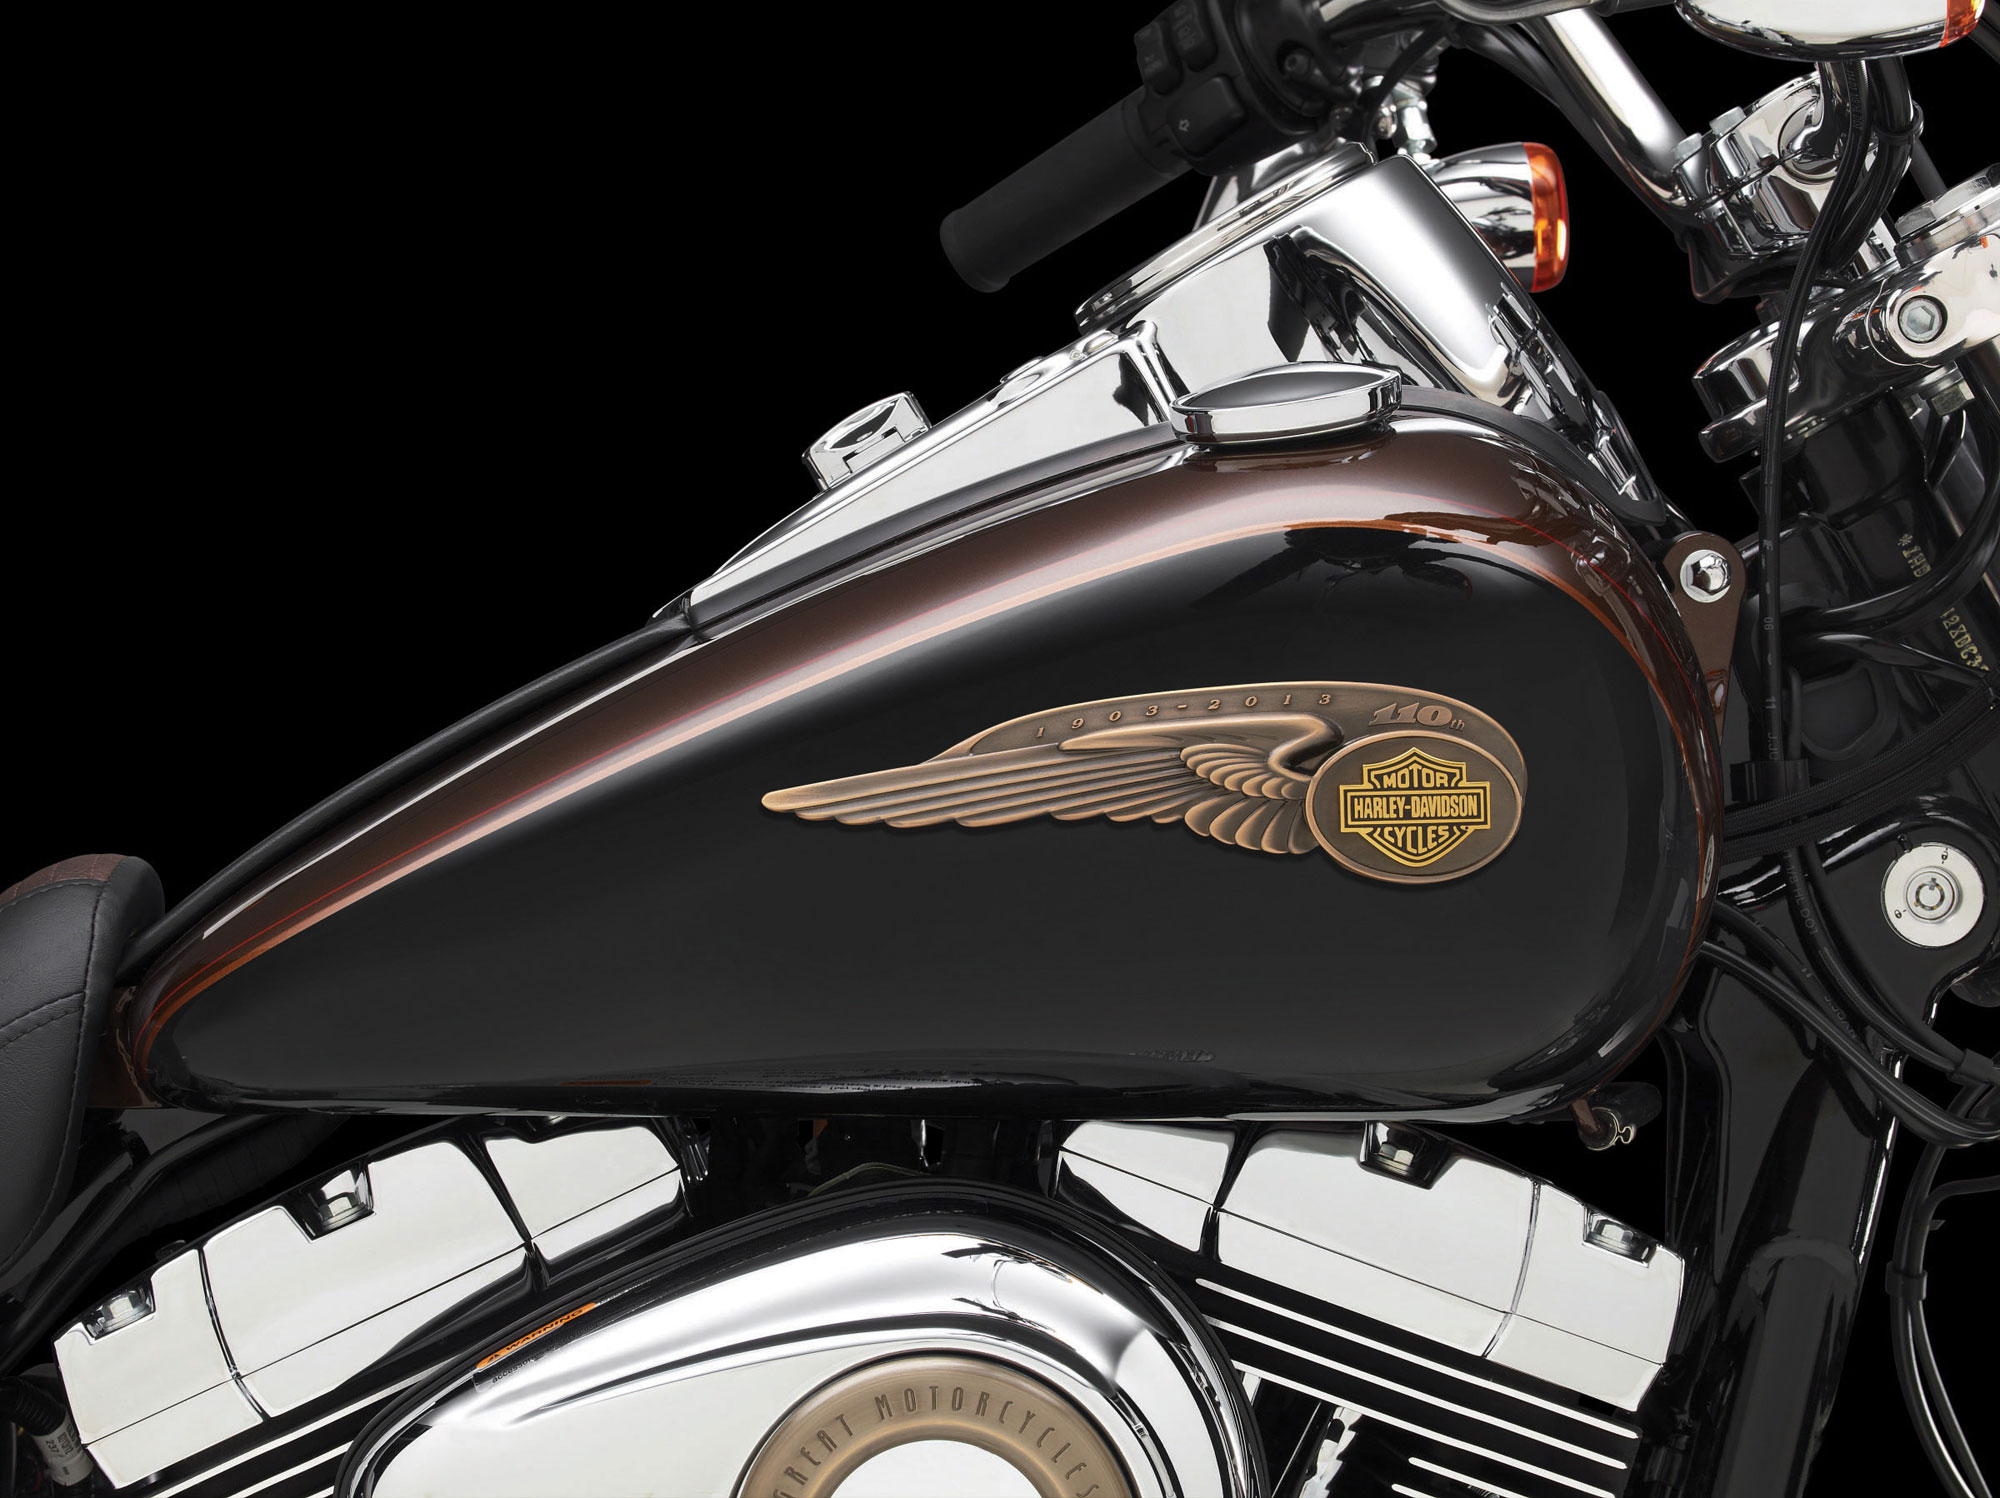 2013 Harley Davidson Fxdc Dyna Super Glide Custom 110th Anniversary Review